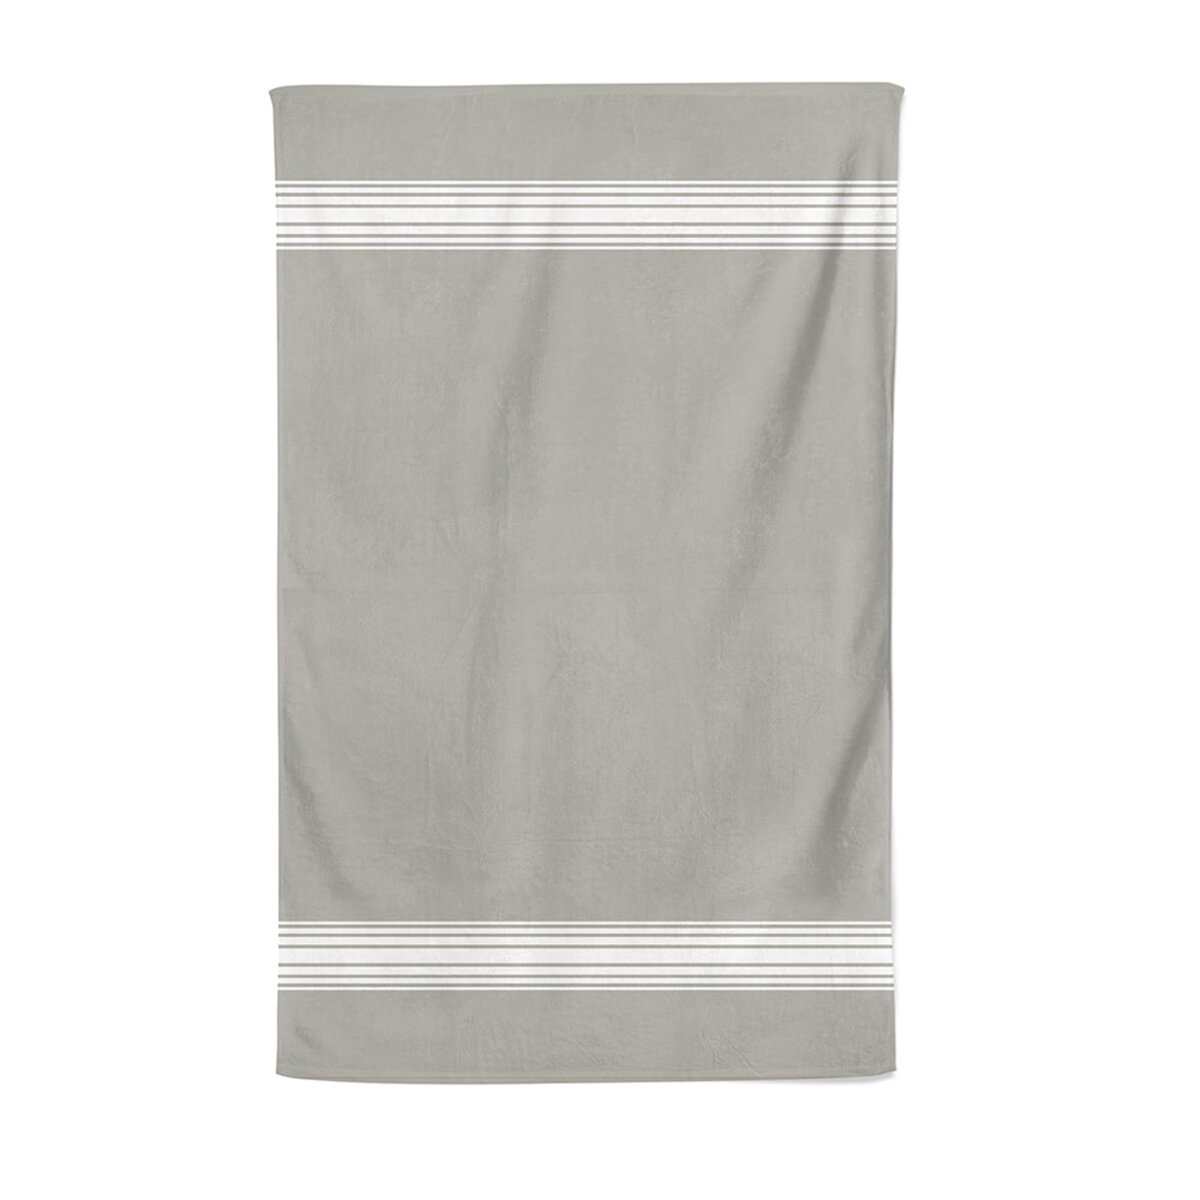 drap de bain coton bio gris clair 100x150 cm